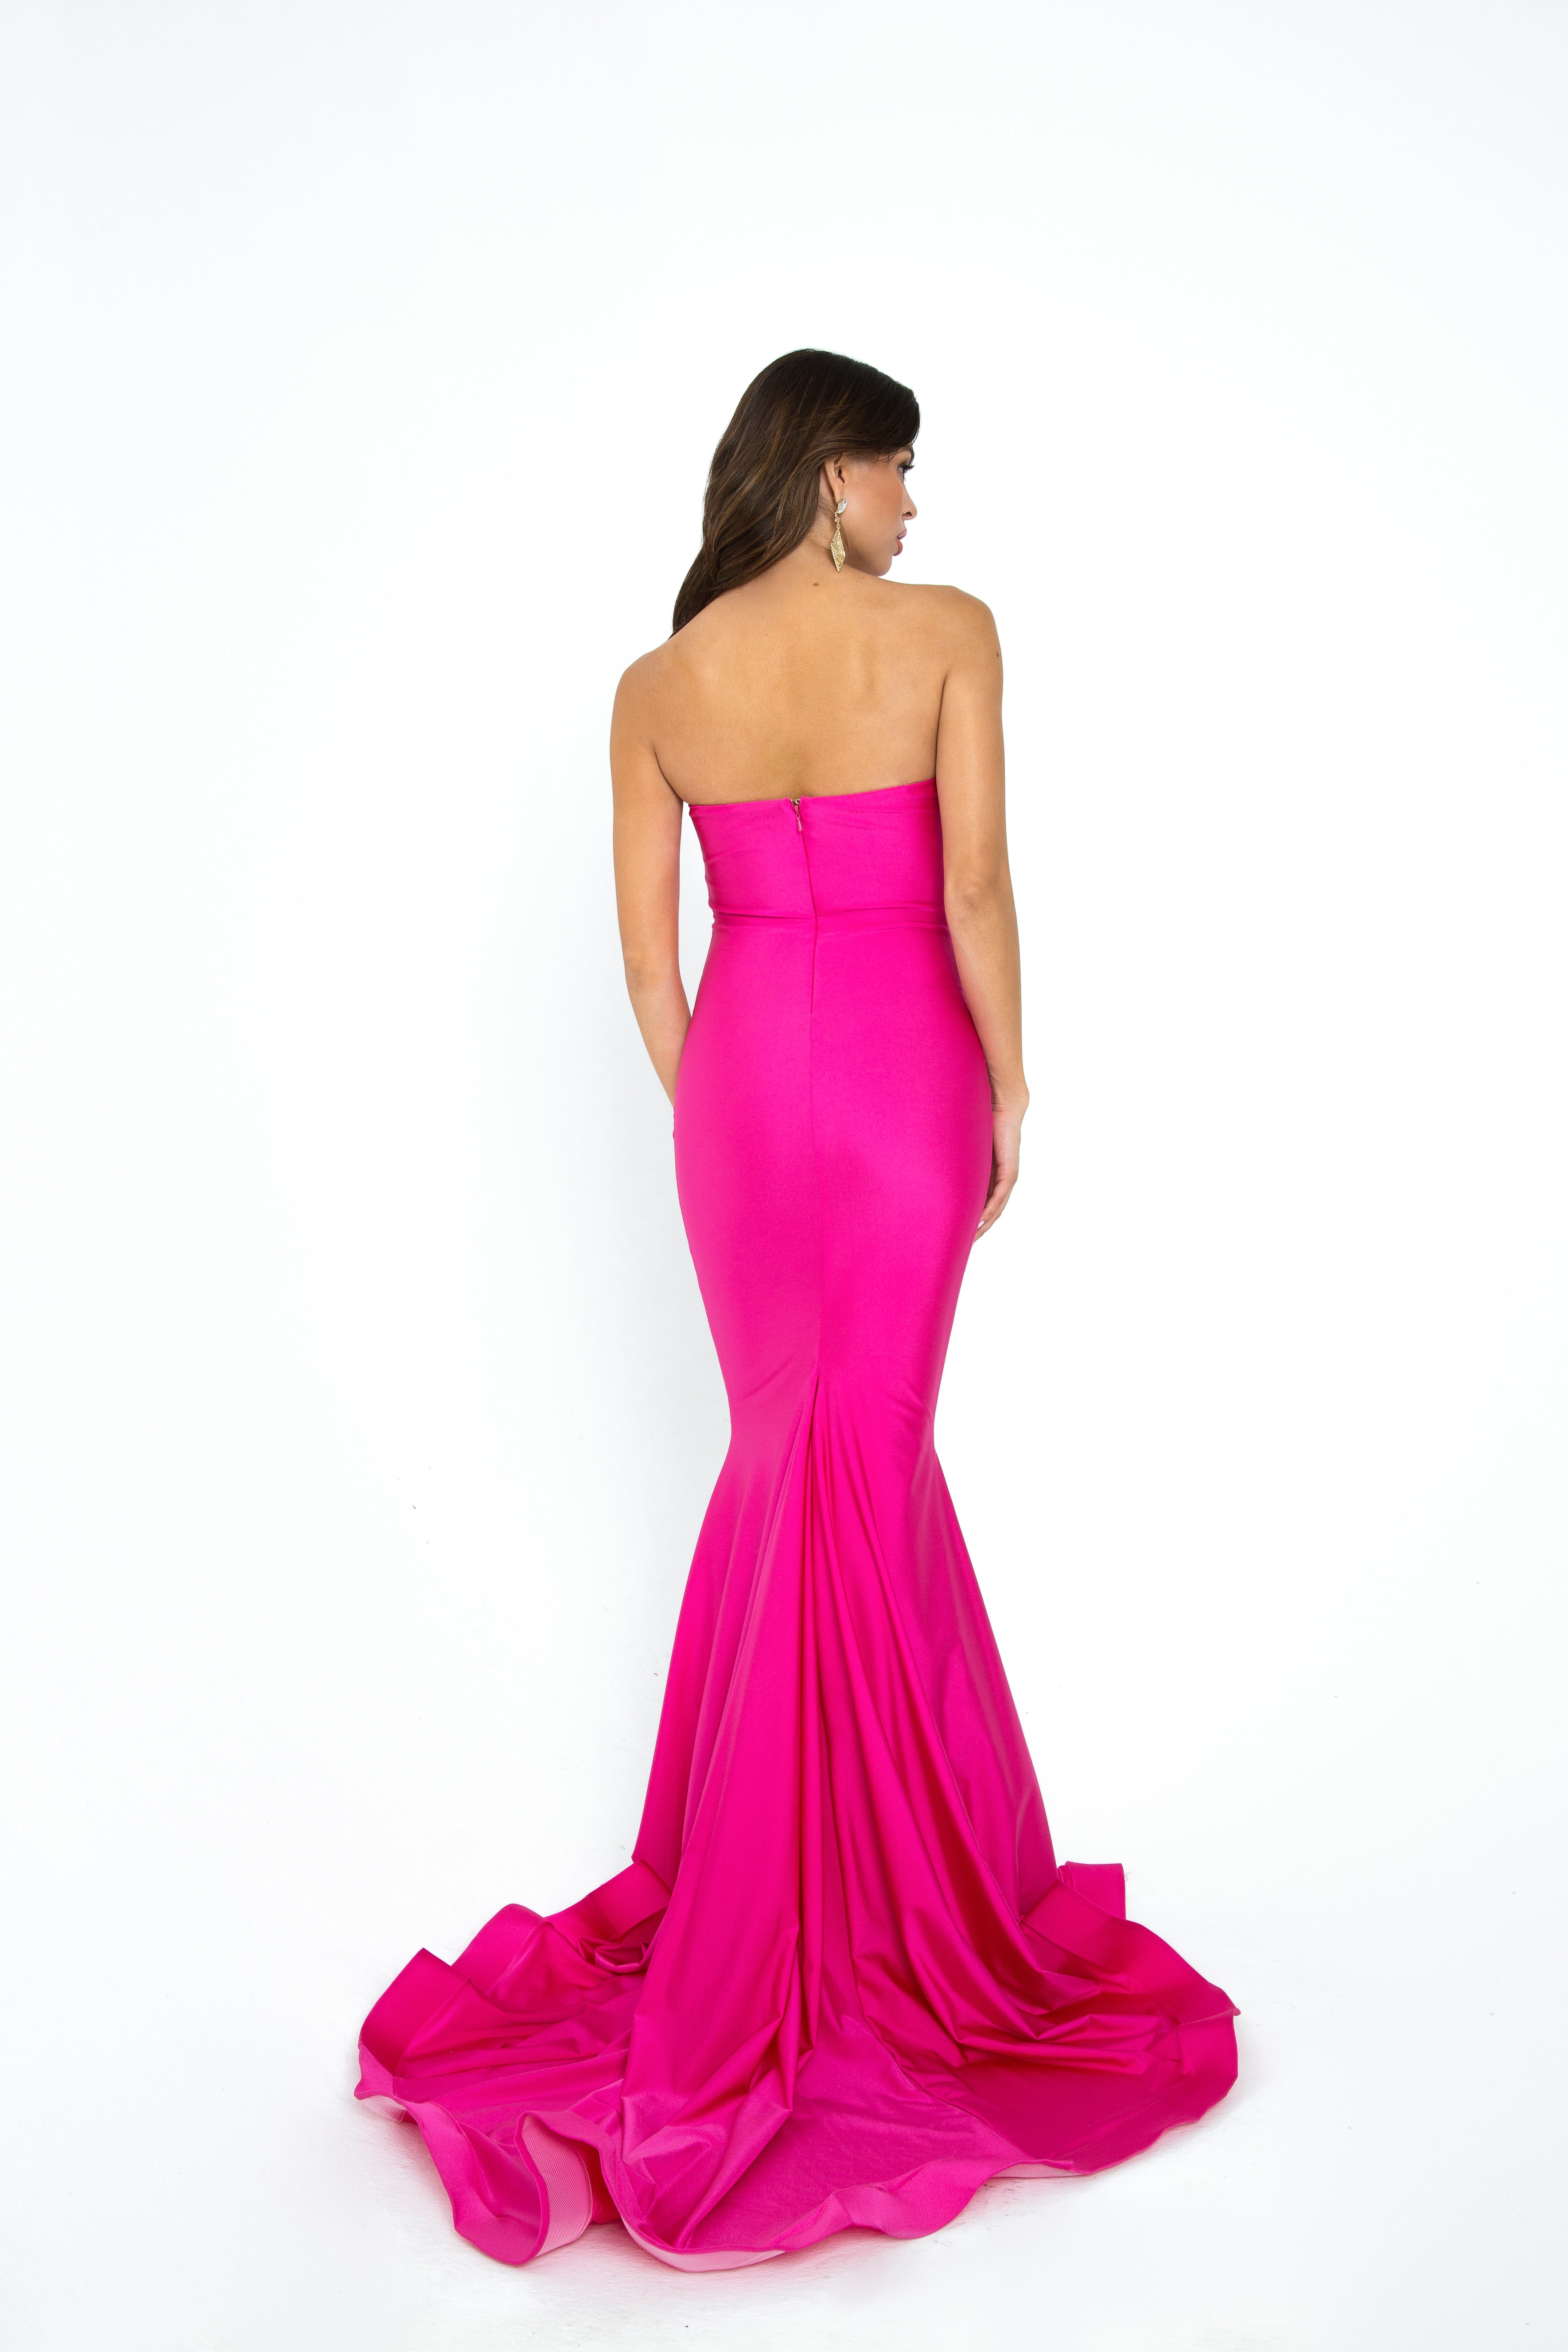 hot pink strapless prom dress